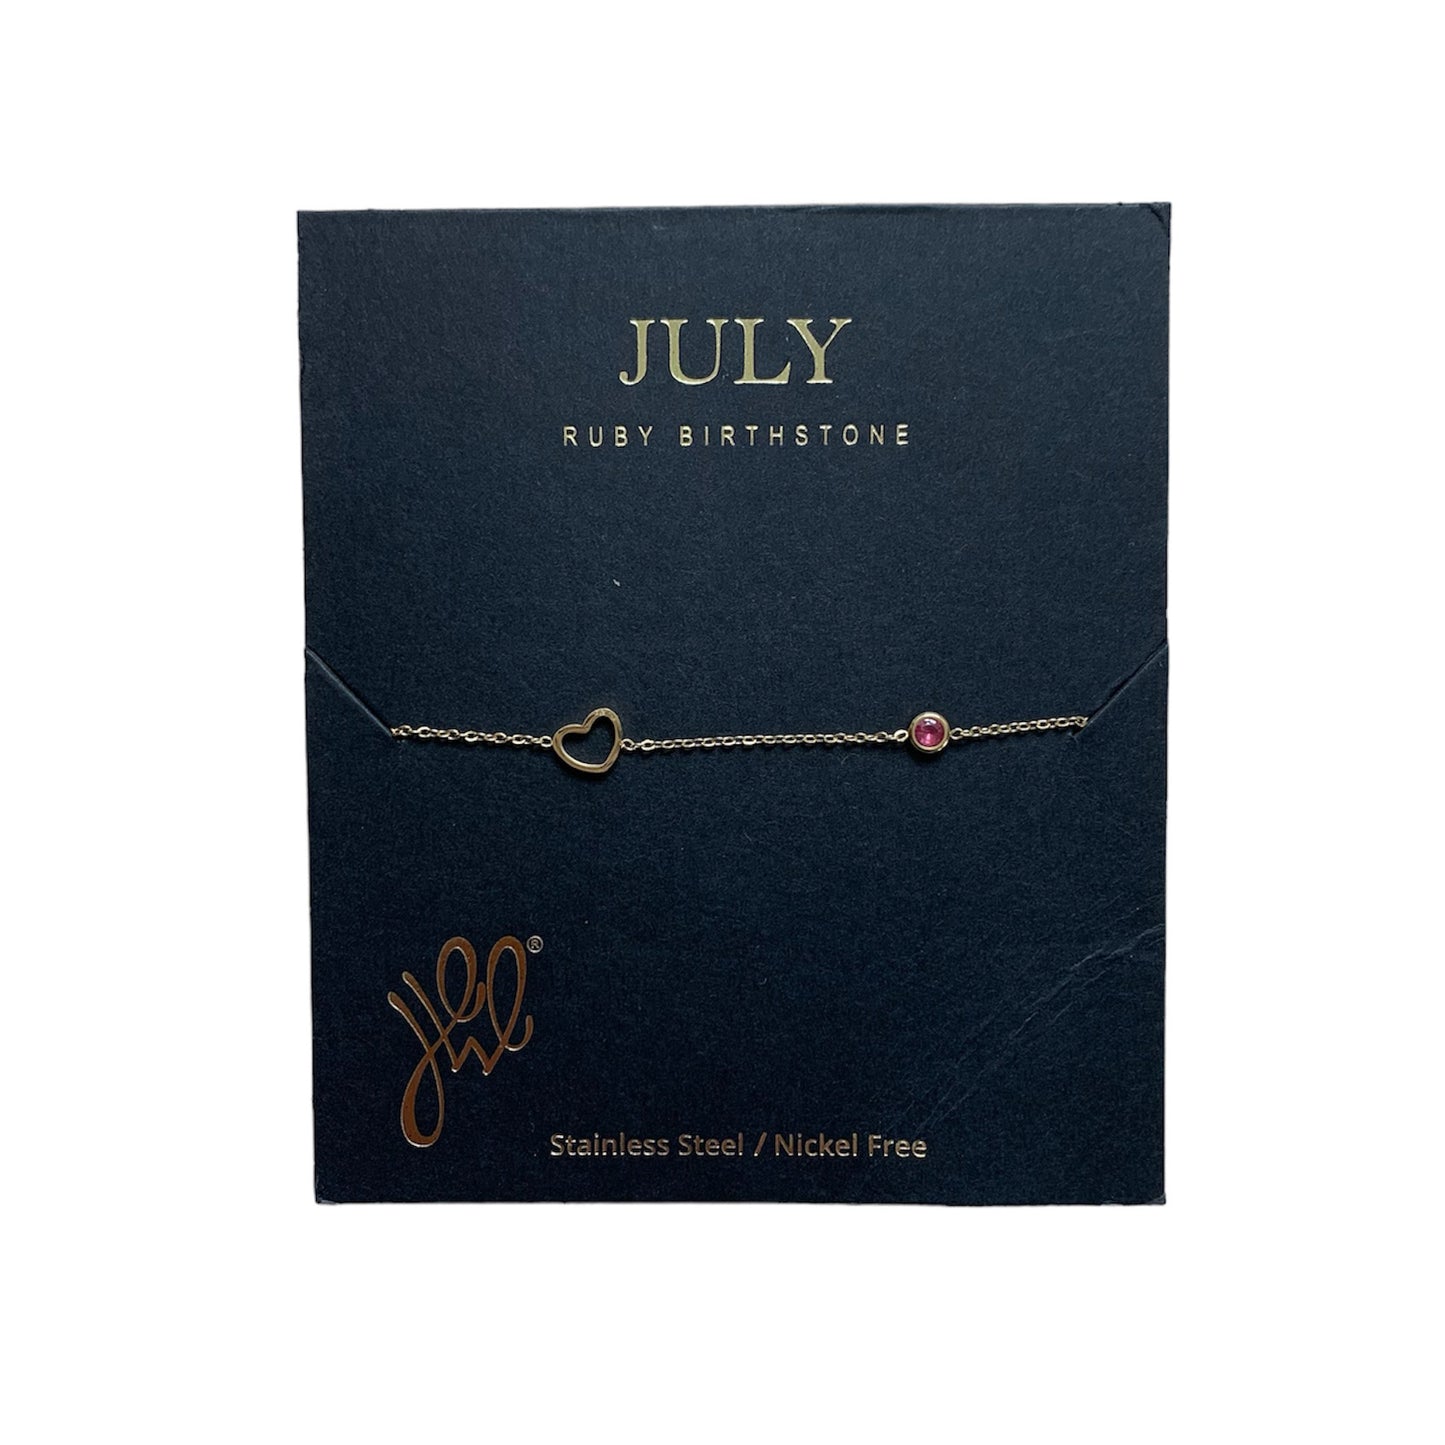 Birthstone armband - July